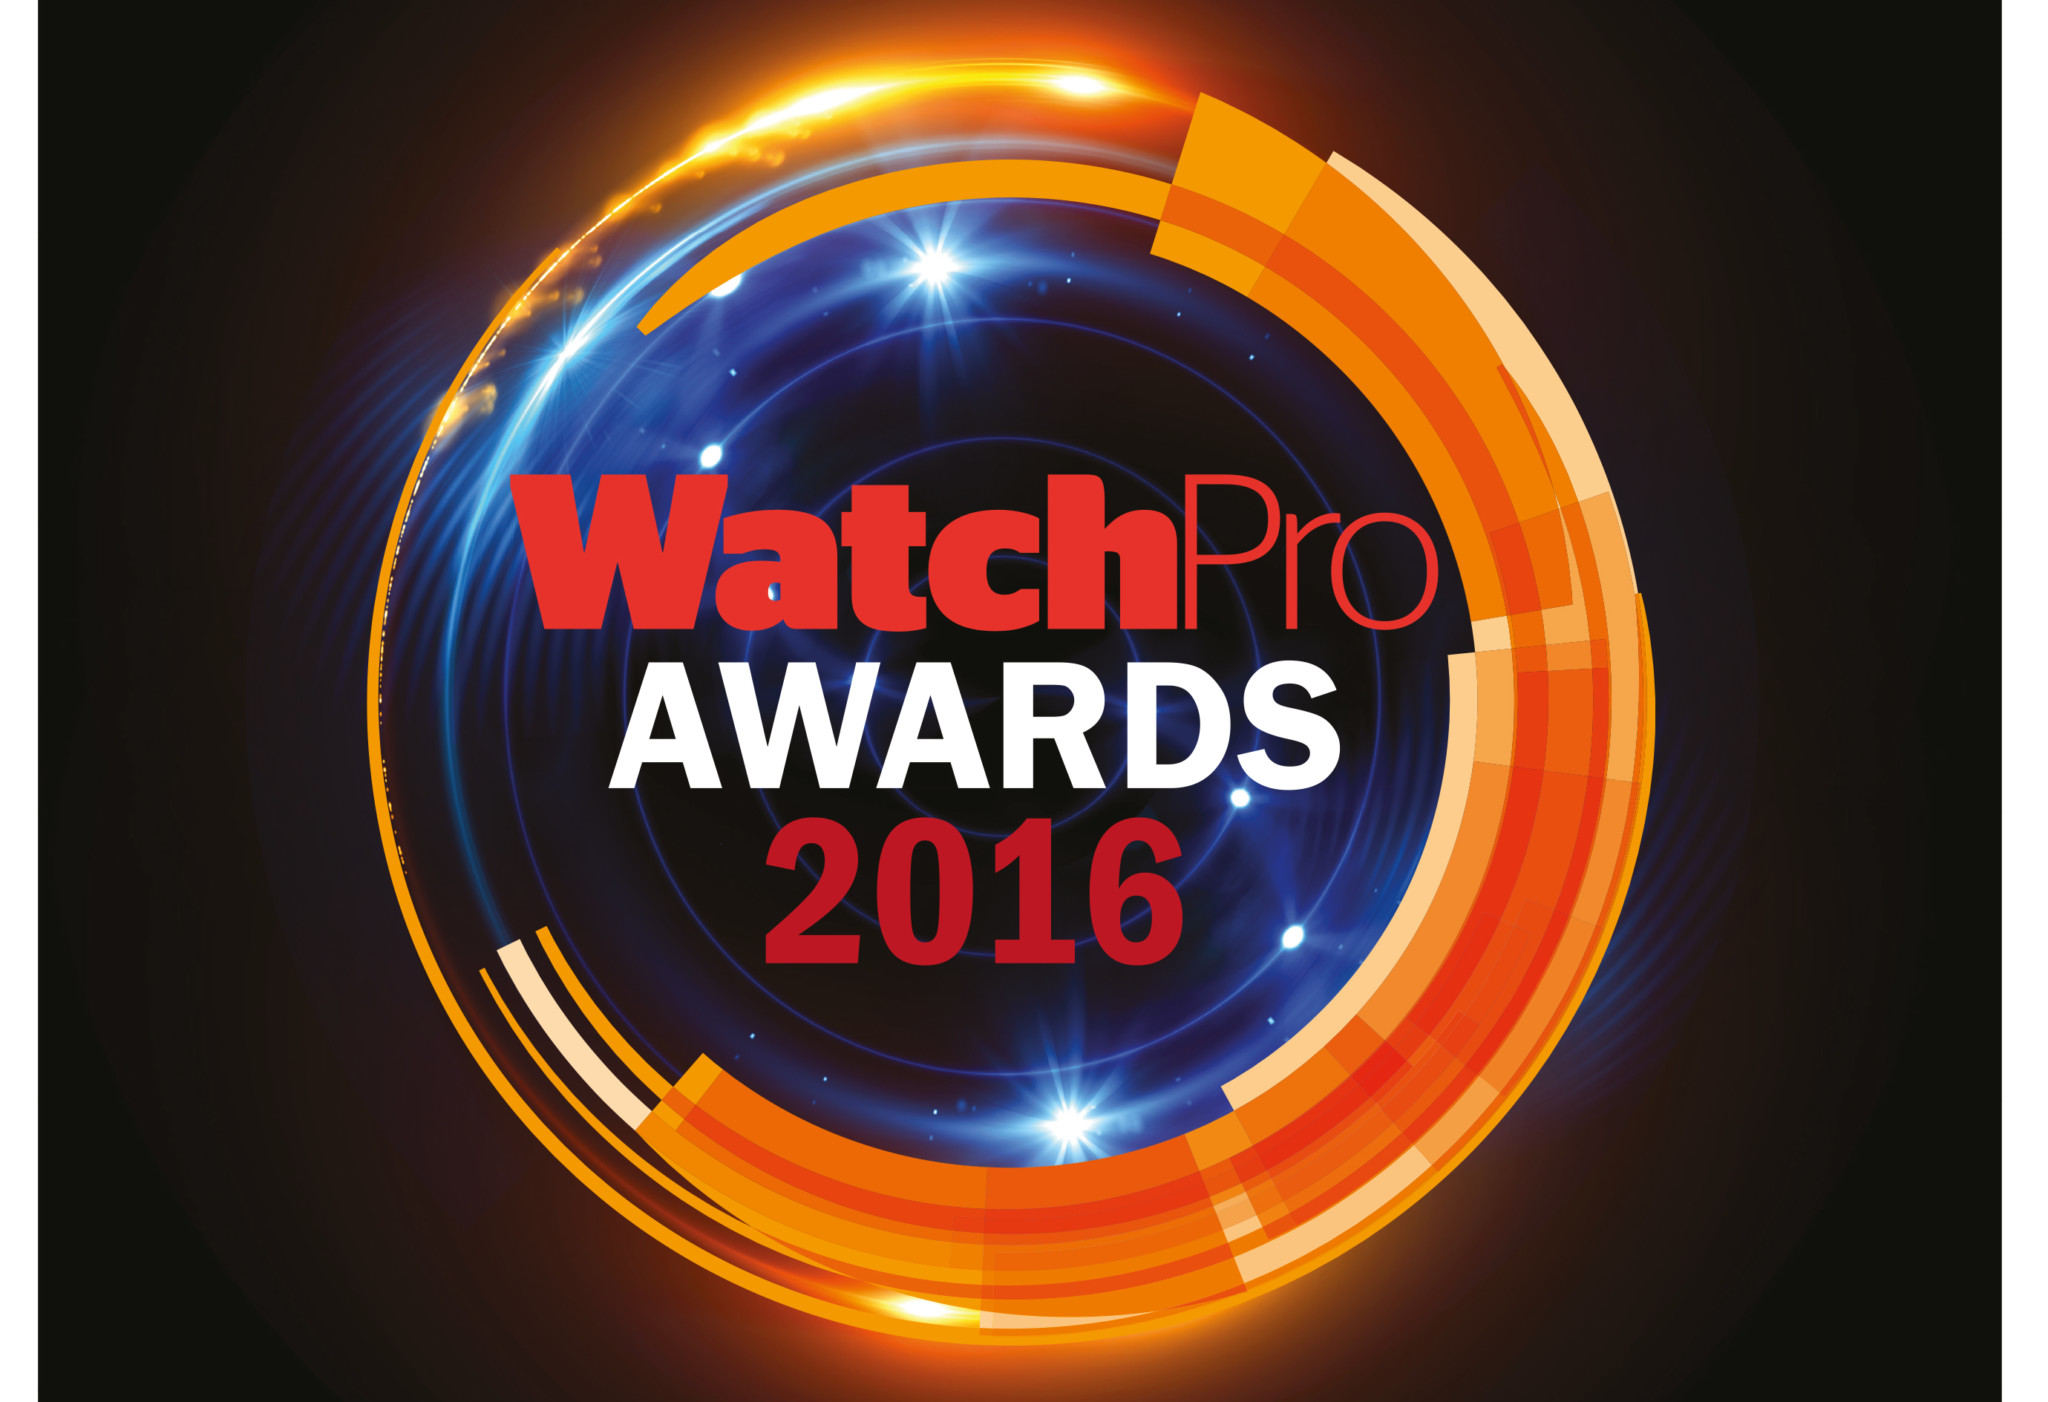 The camden watch company watchpro awards logo